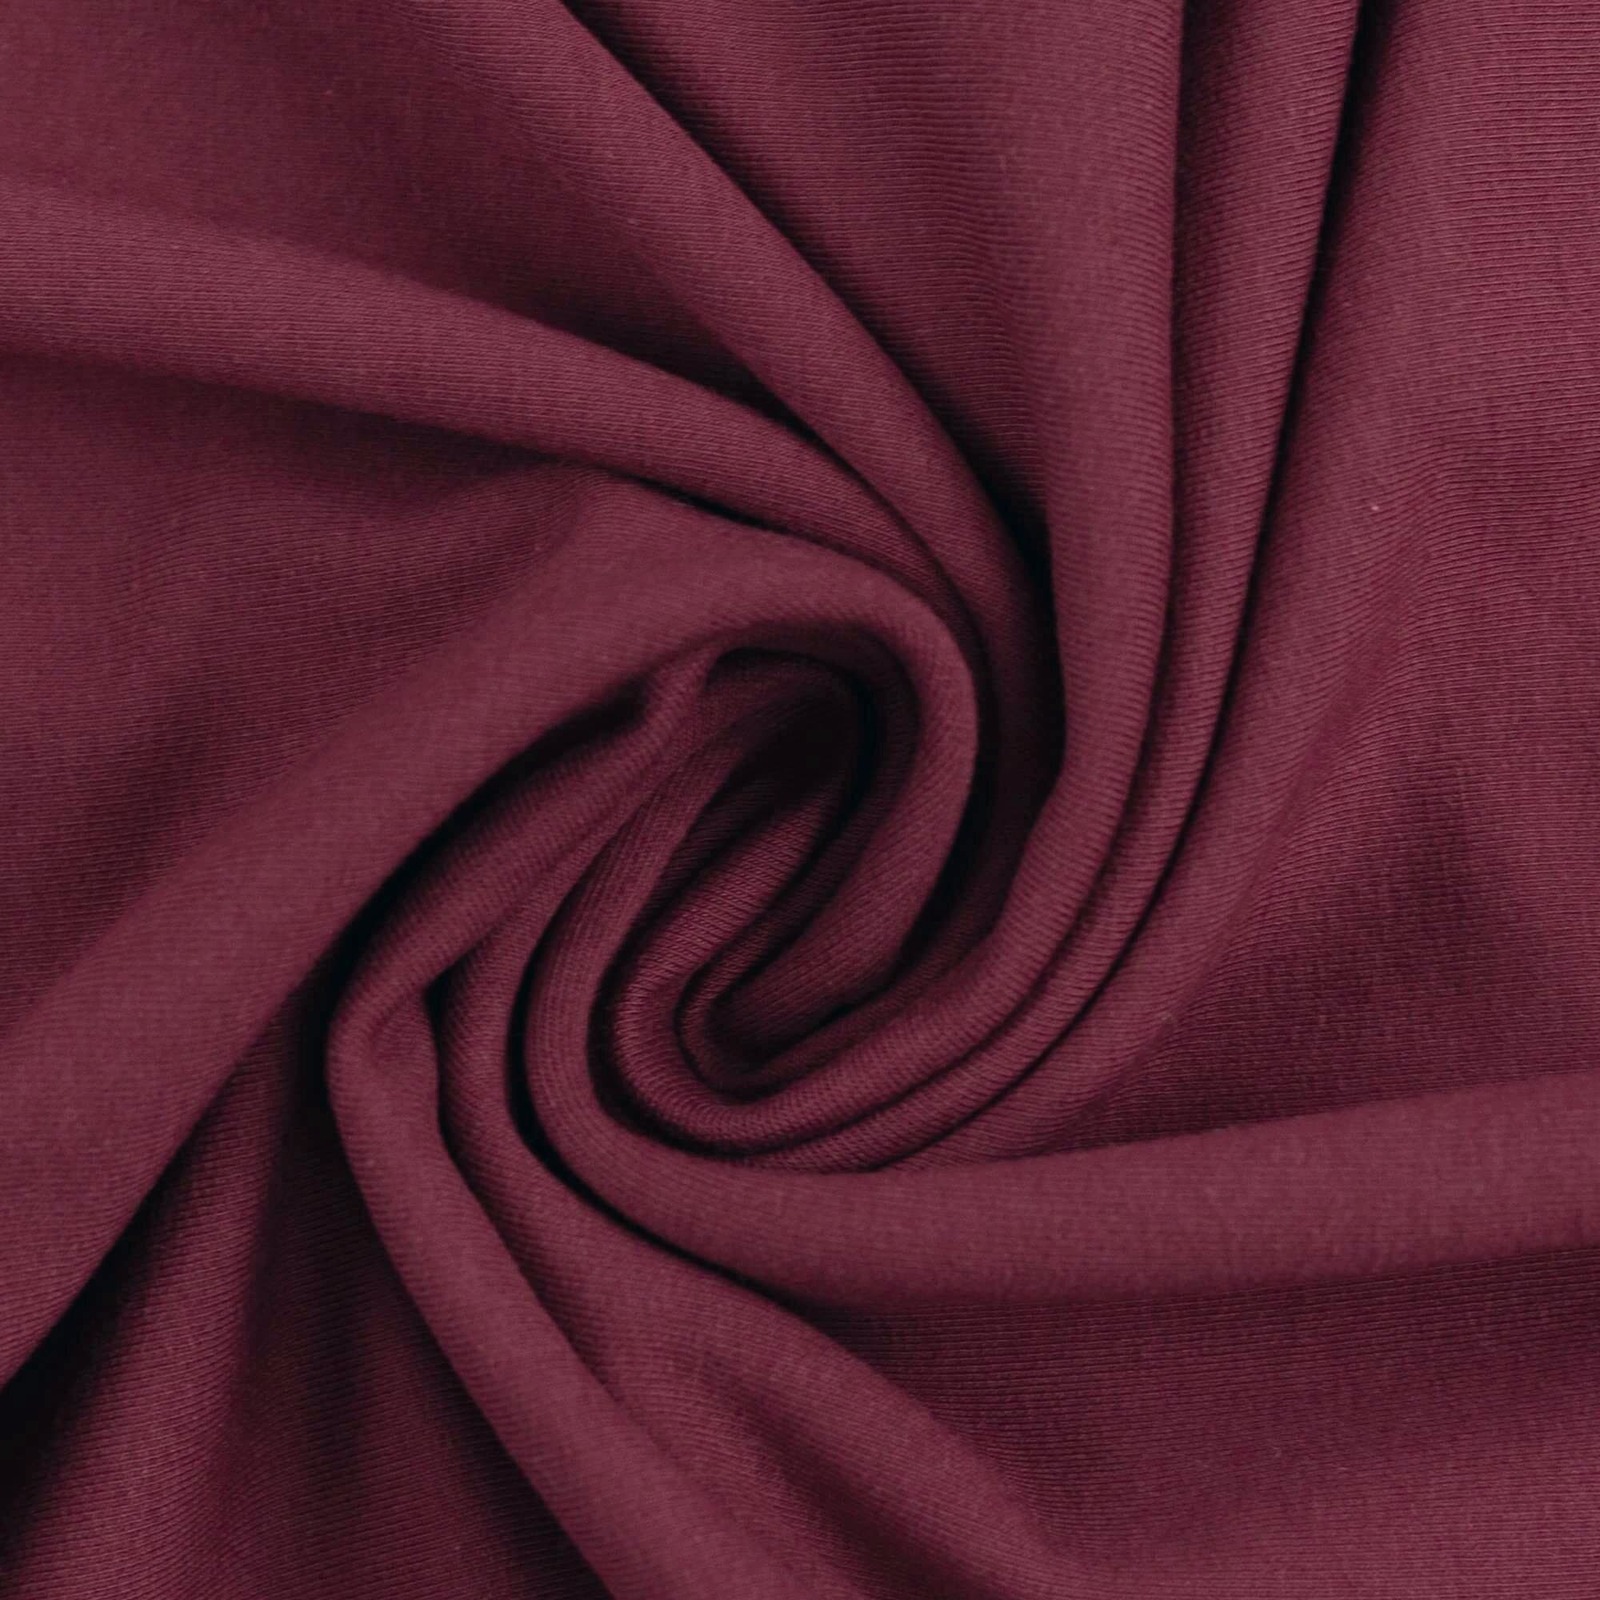 European Cotton Elastane Lycra Jersey | Solid Burgundy Knit Fabric ...